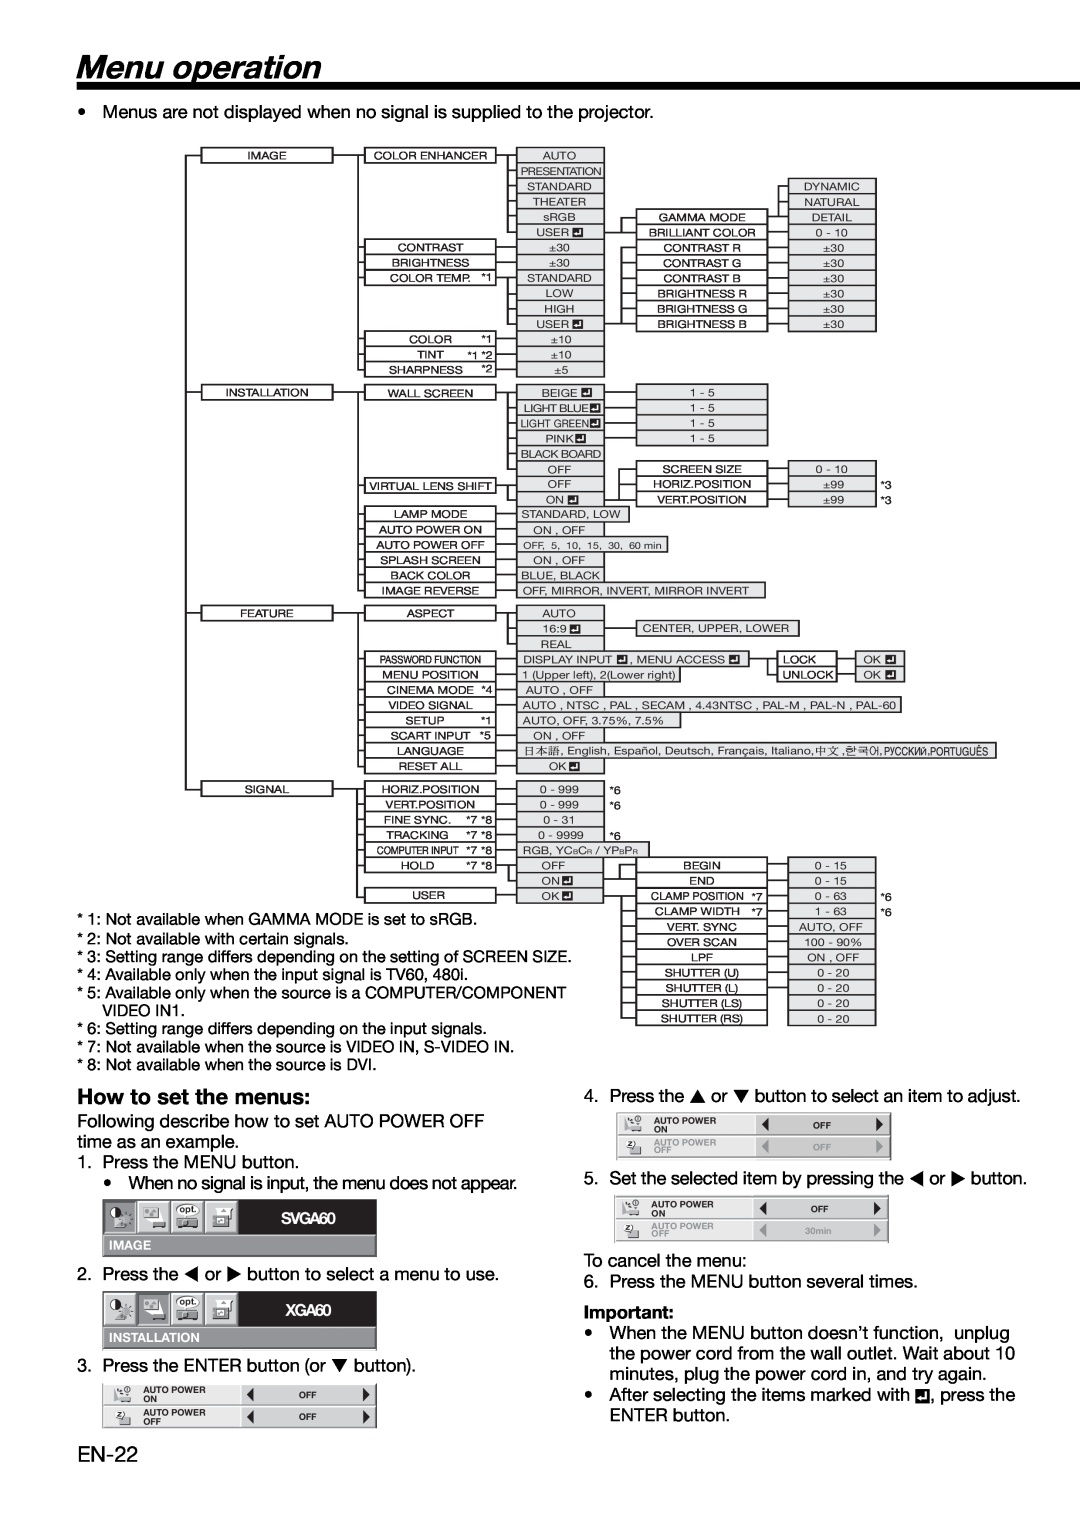 Mitsubishi Electronics XD460U user manual Menu operation, How to set the menus 